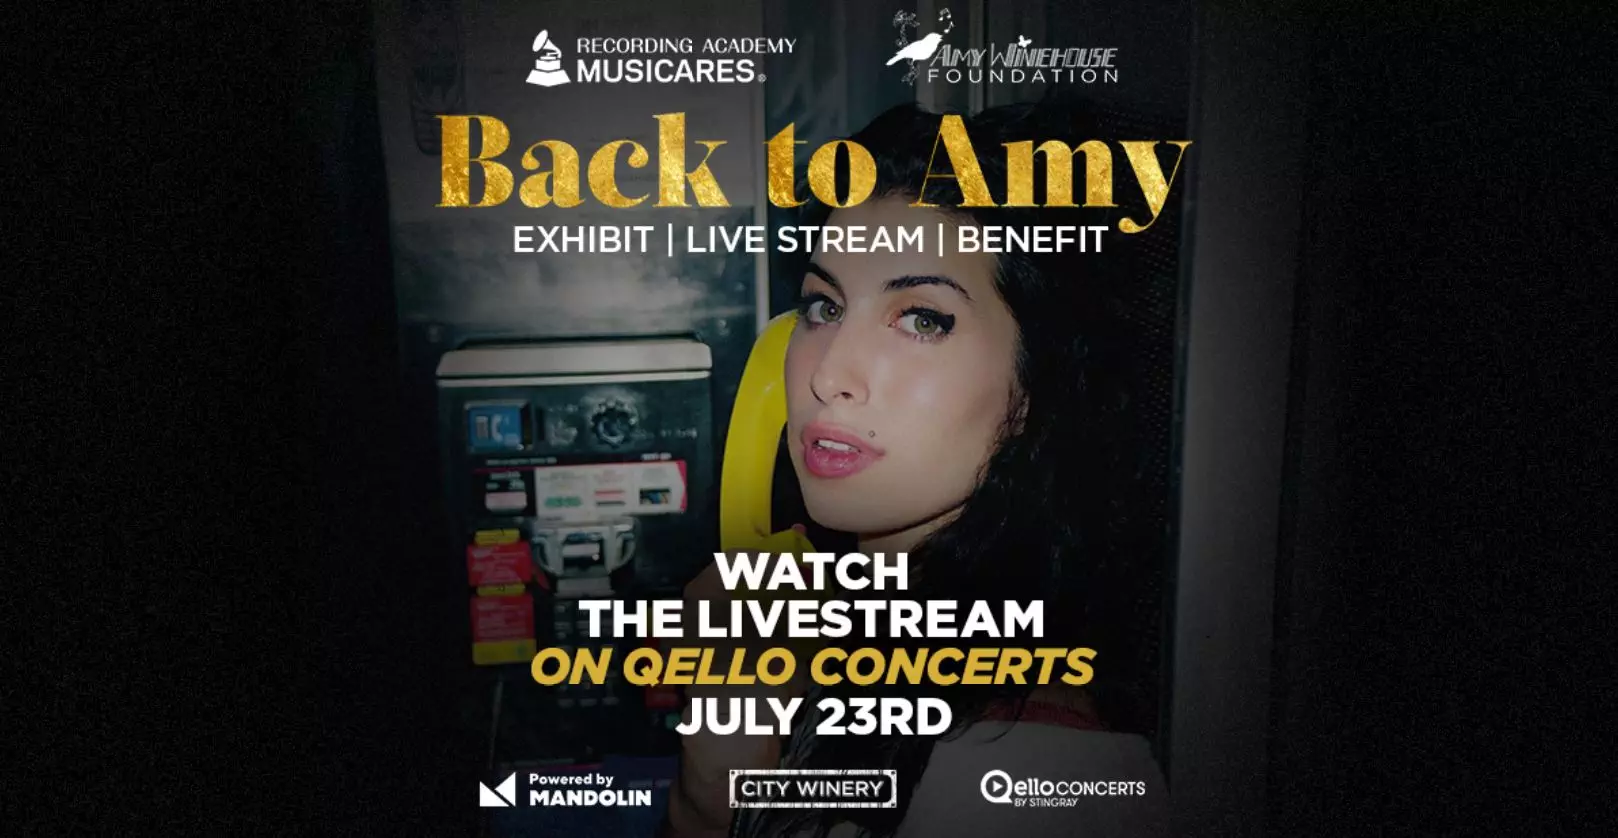 Amy Winehouse Tribute NFT